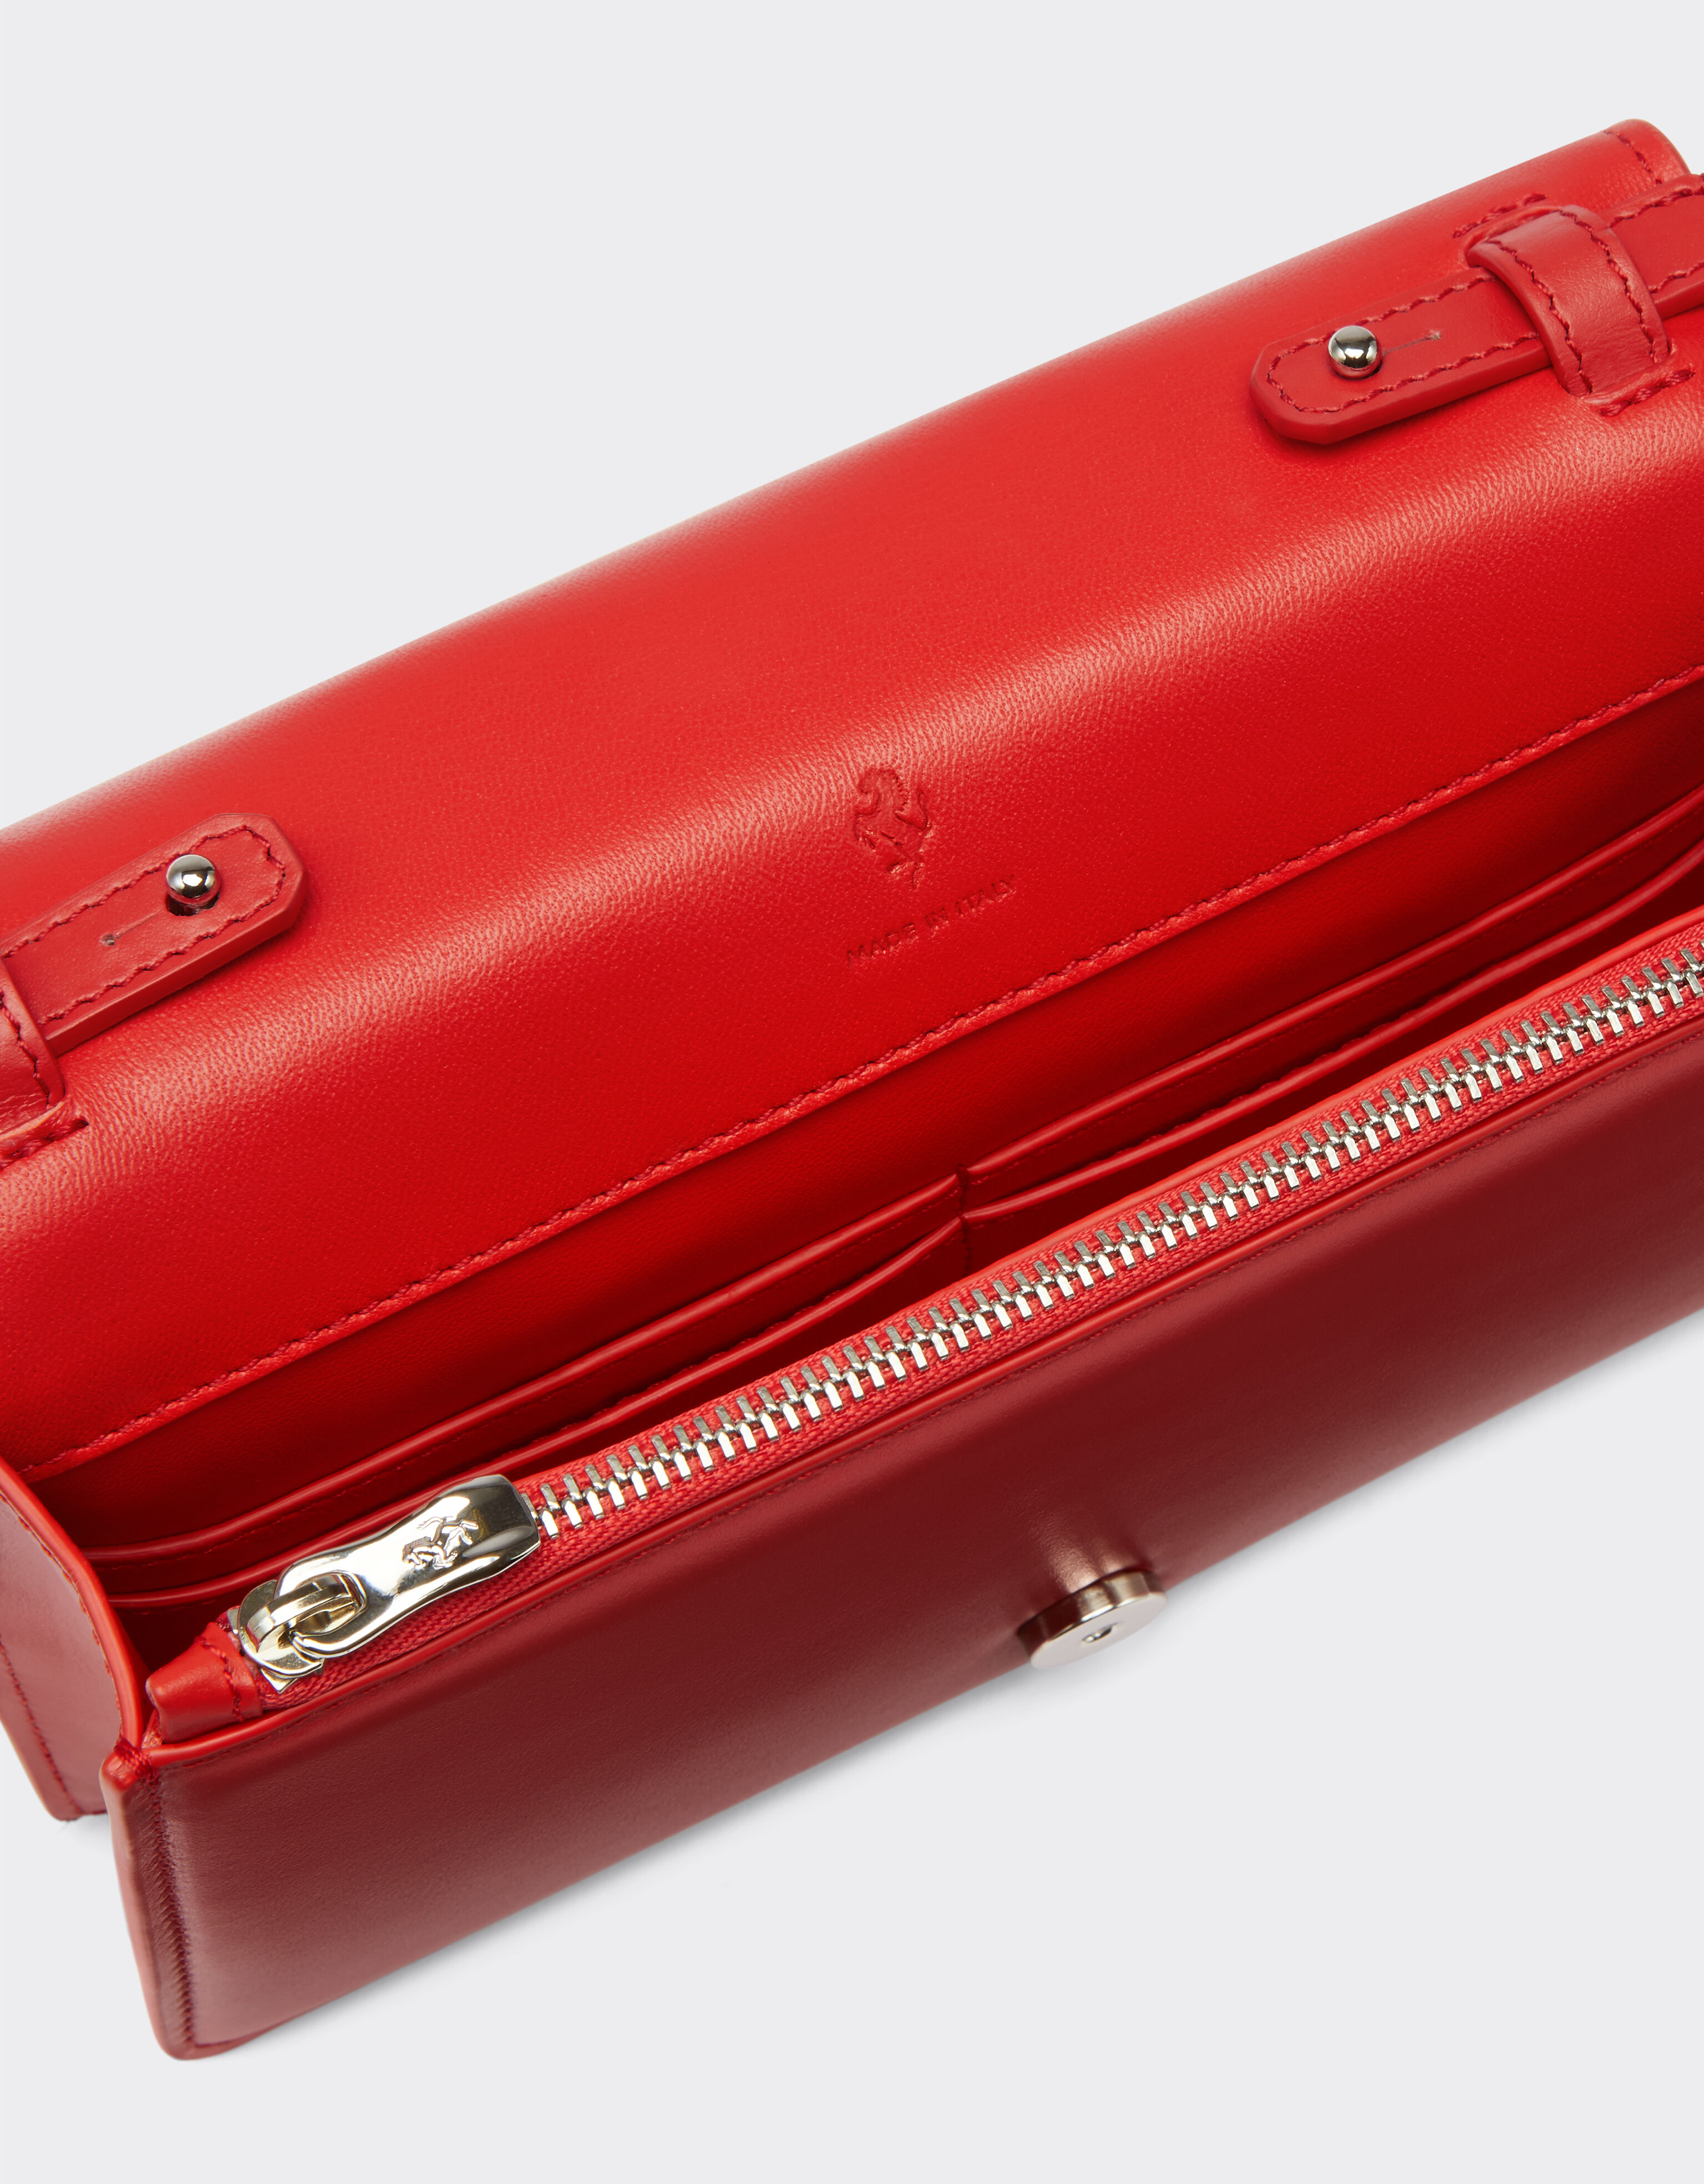 Ferrari 法拉利 GT 链饰皮革手拿钱包 Rosso Dino 红色 20563f